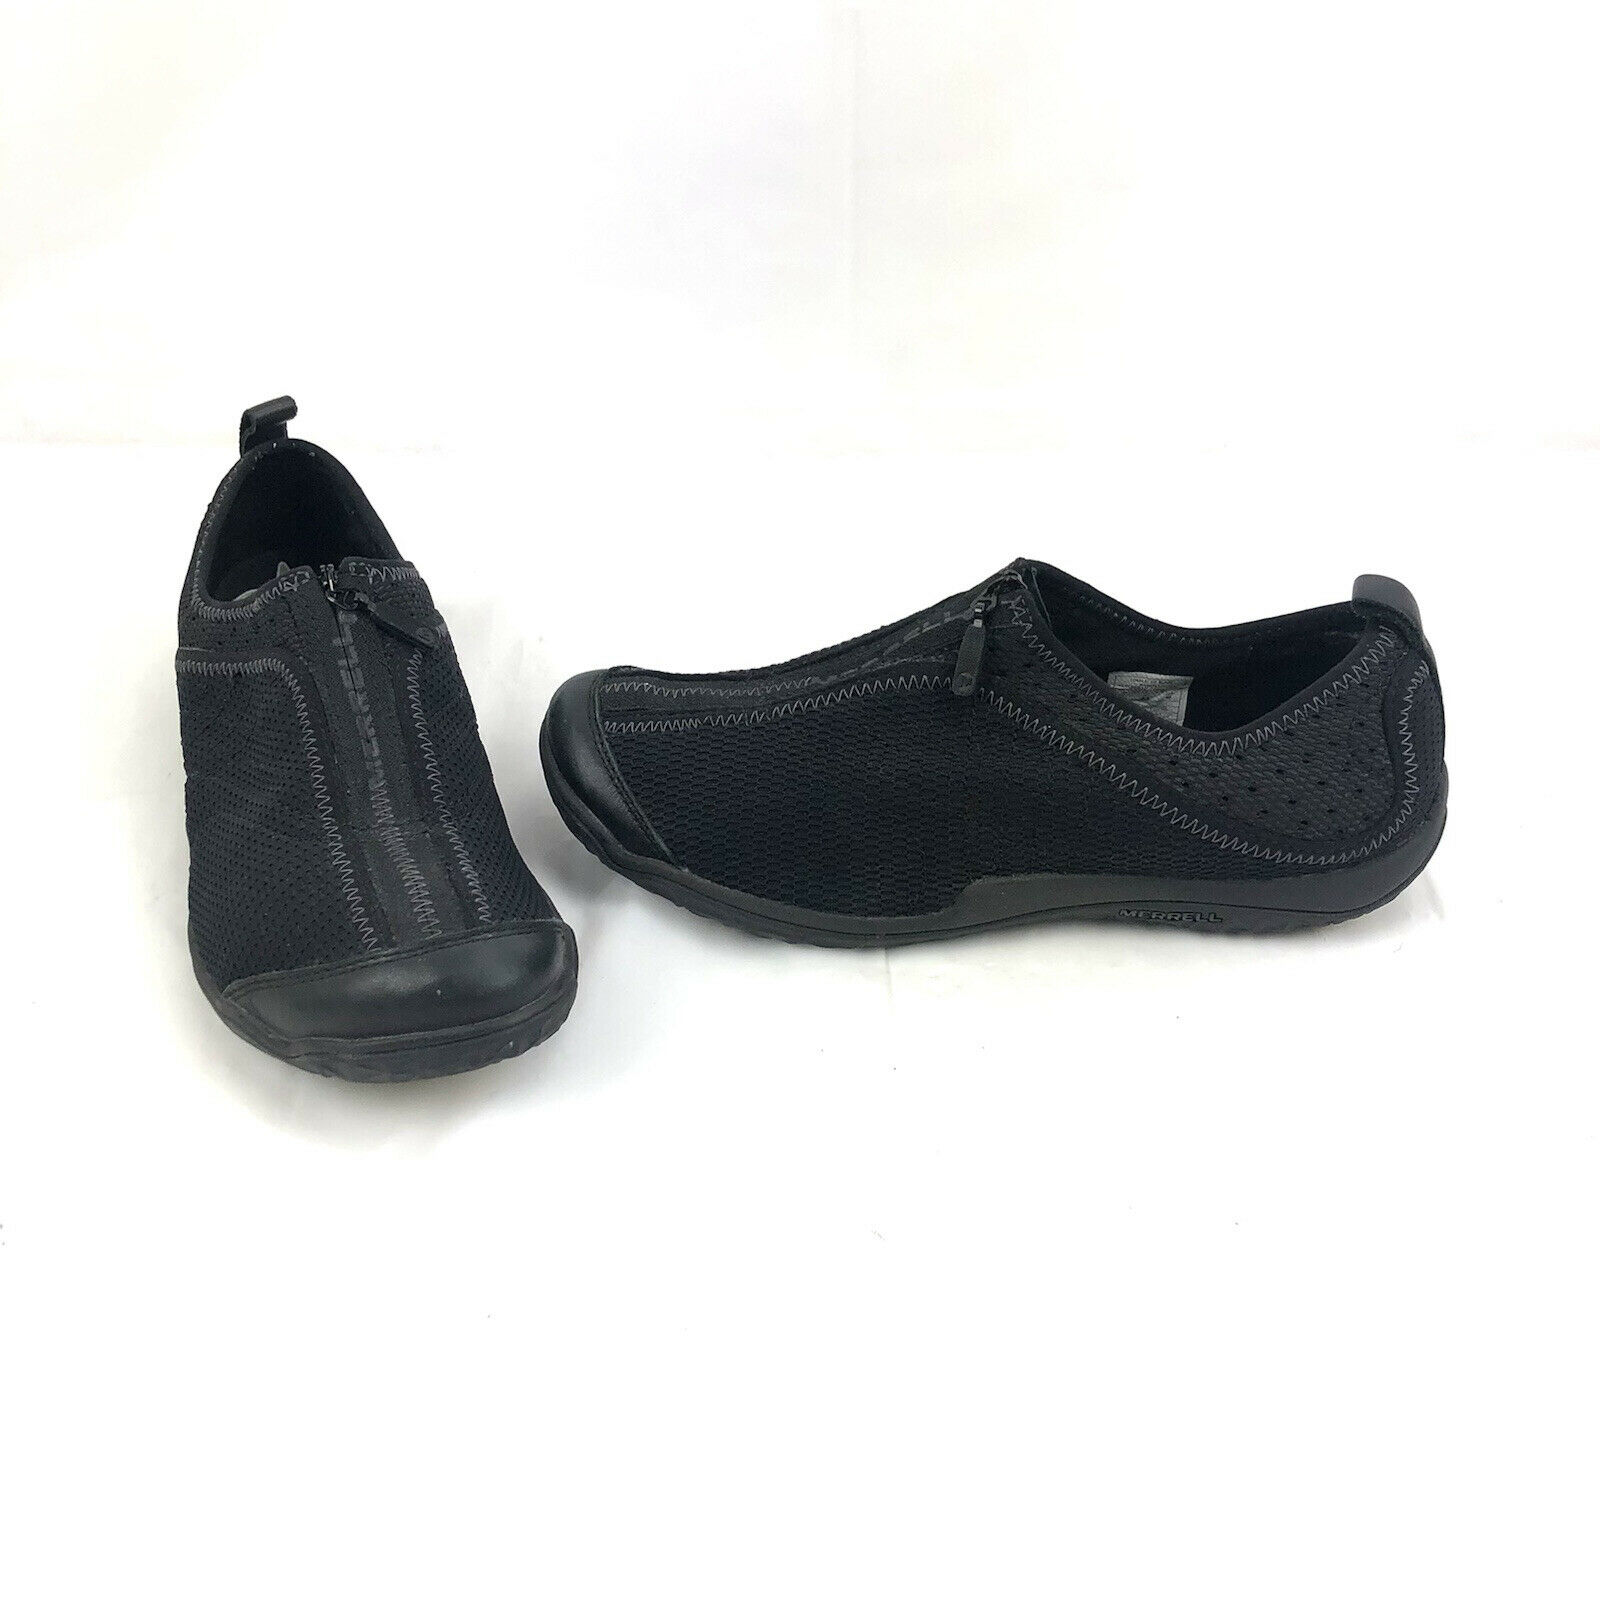 Merrell Lorelei Shoes With Zipper Walking Outdoor Comfort Womens Size 9 Black